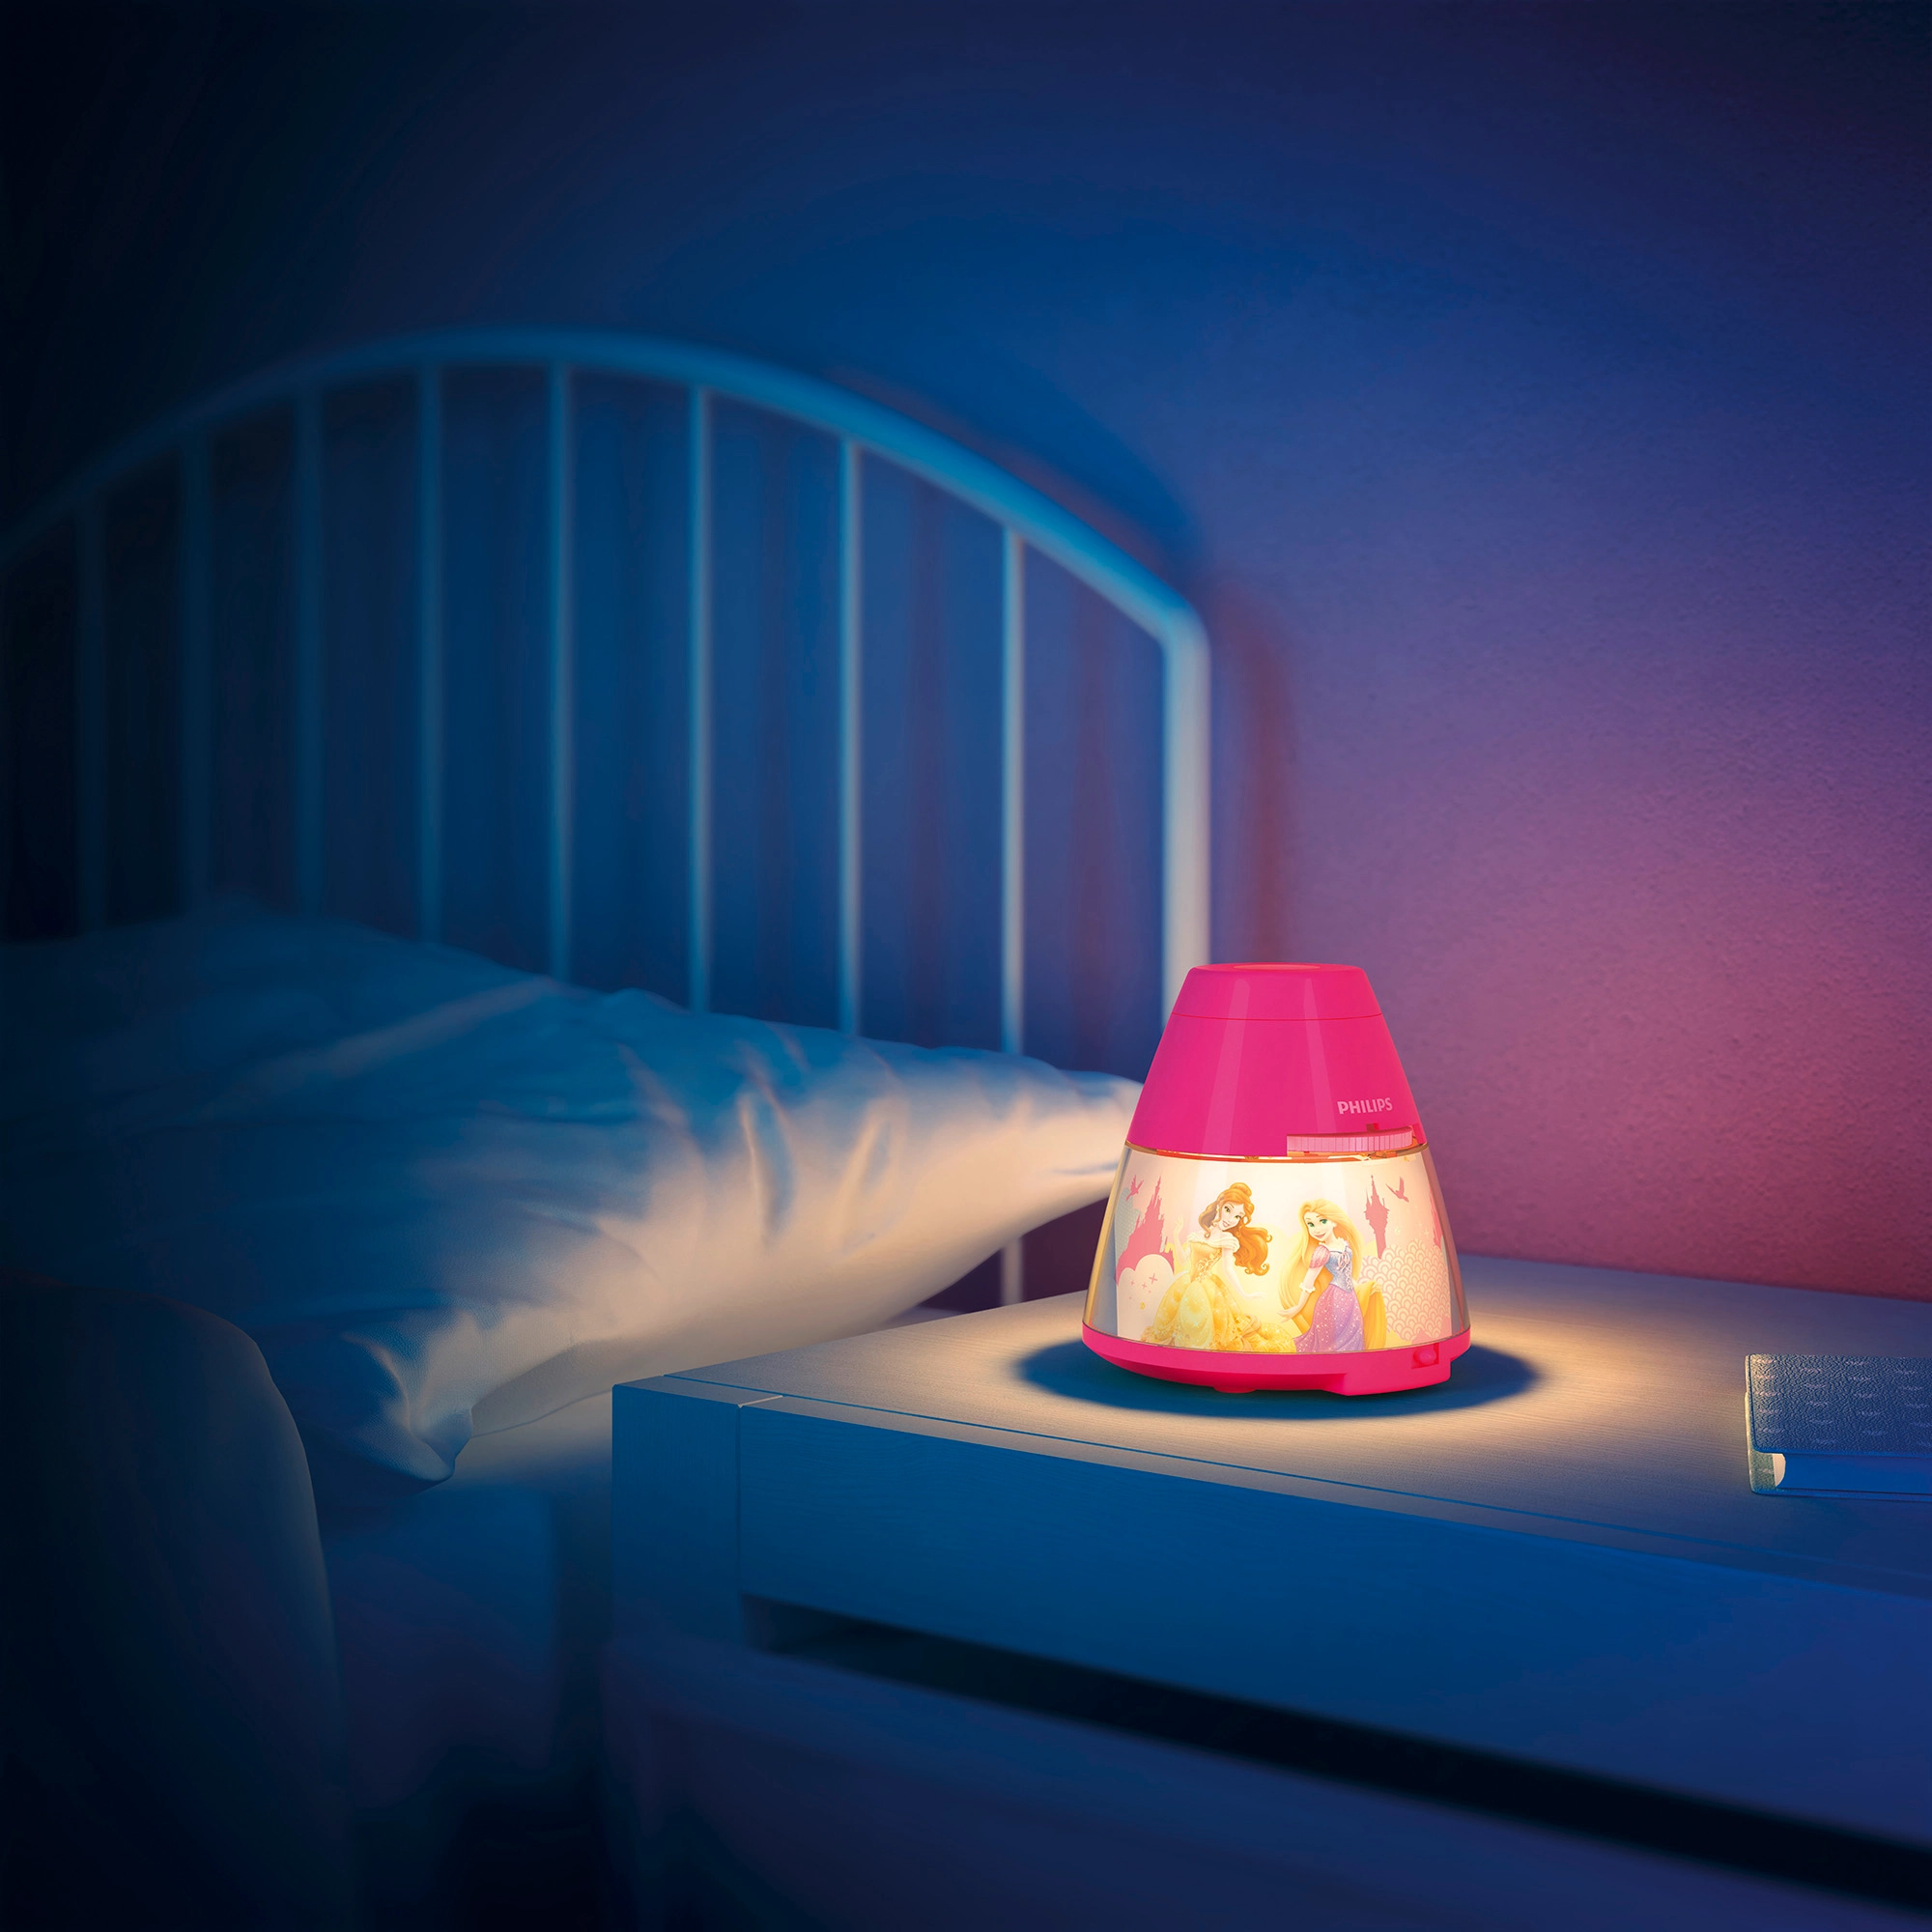 Philips lampada da notte proiettore Disney Princess LED